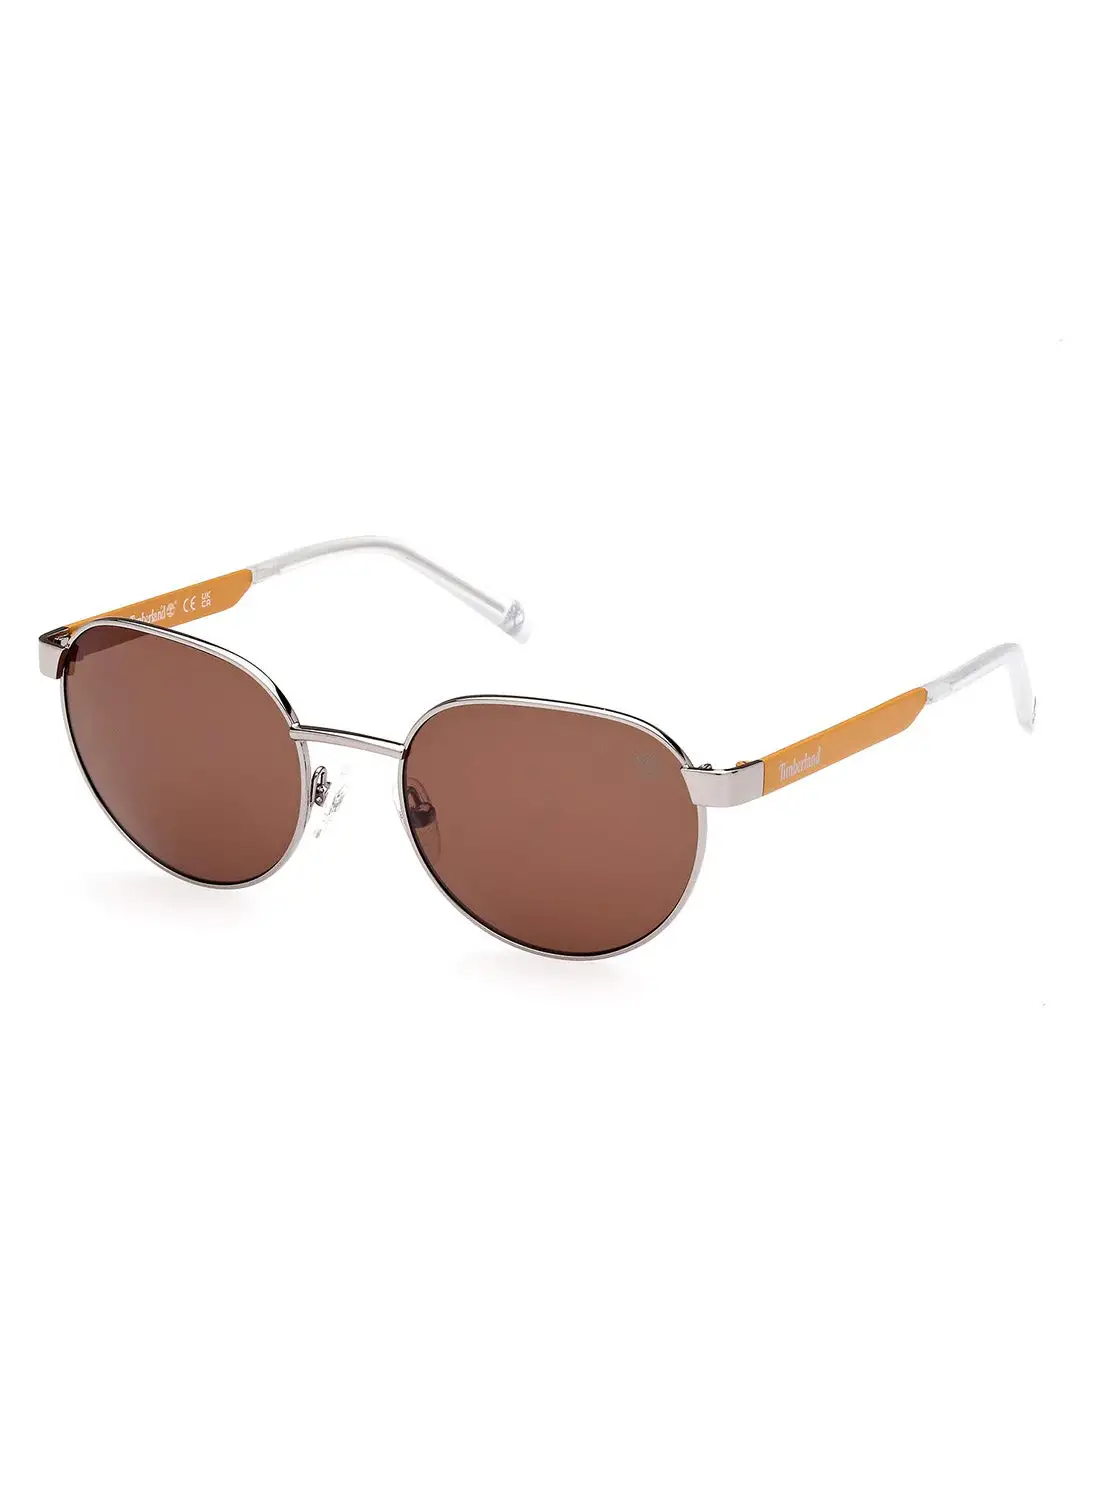 Timberland Unisex UV Protection Round Shape Sunglasses - TB933008E51 - Lens Size: 51 Mm